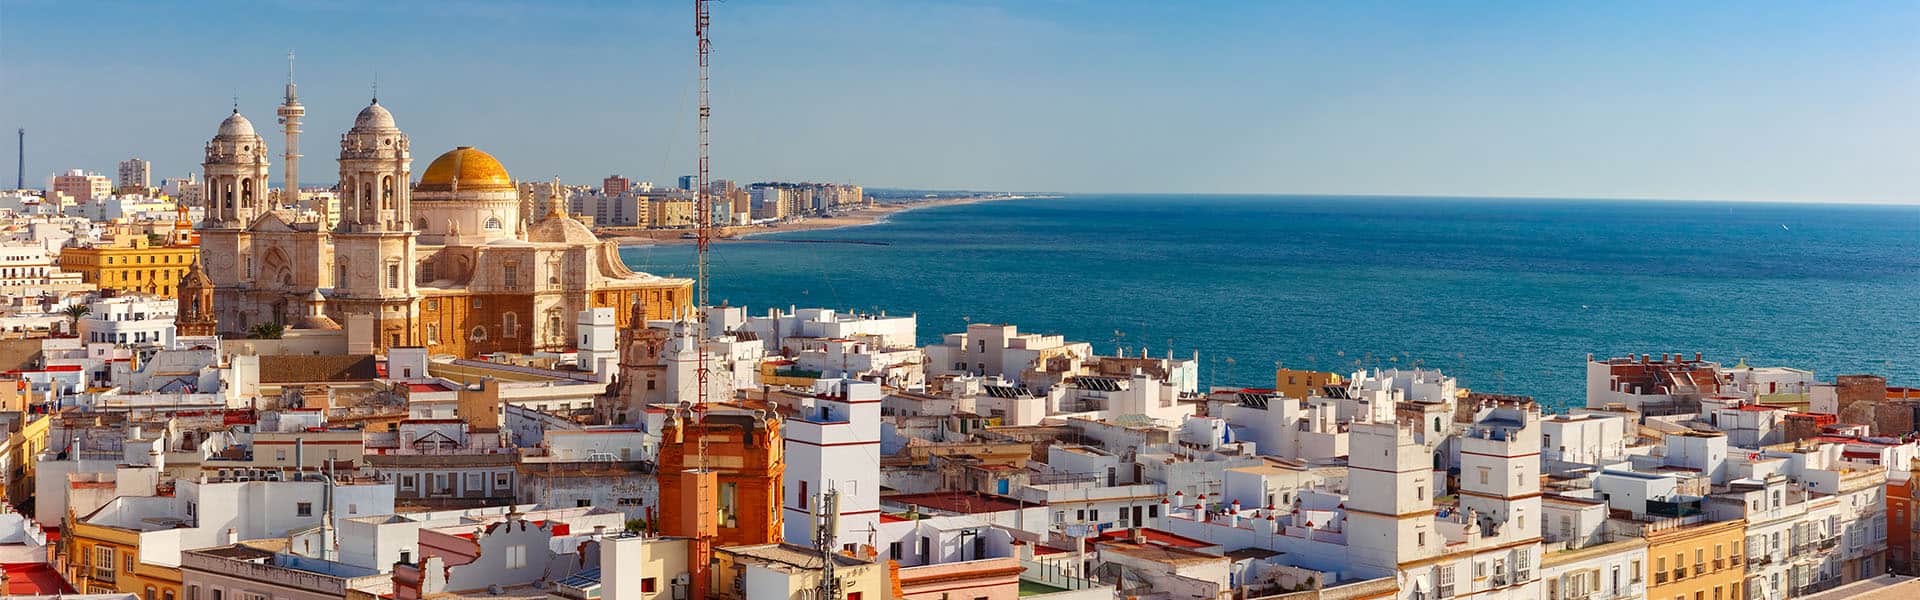 Transatlantic: Spain & Morocco